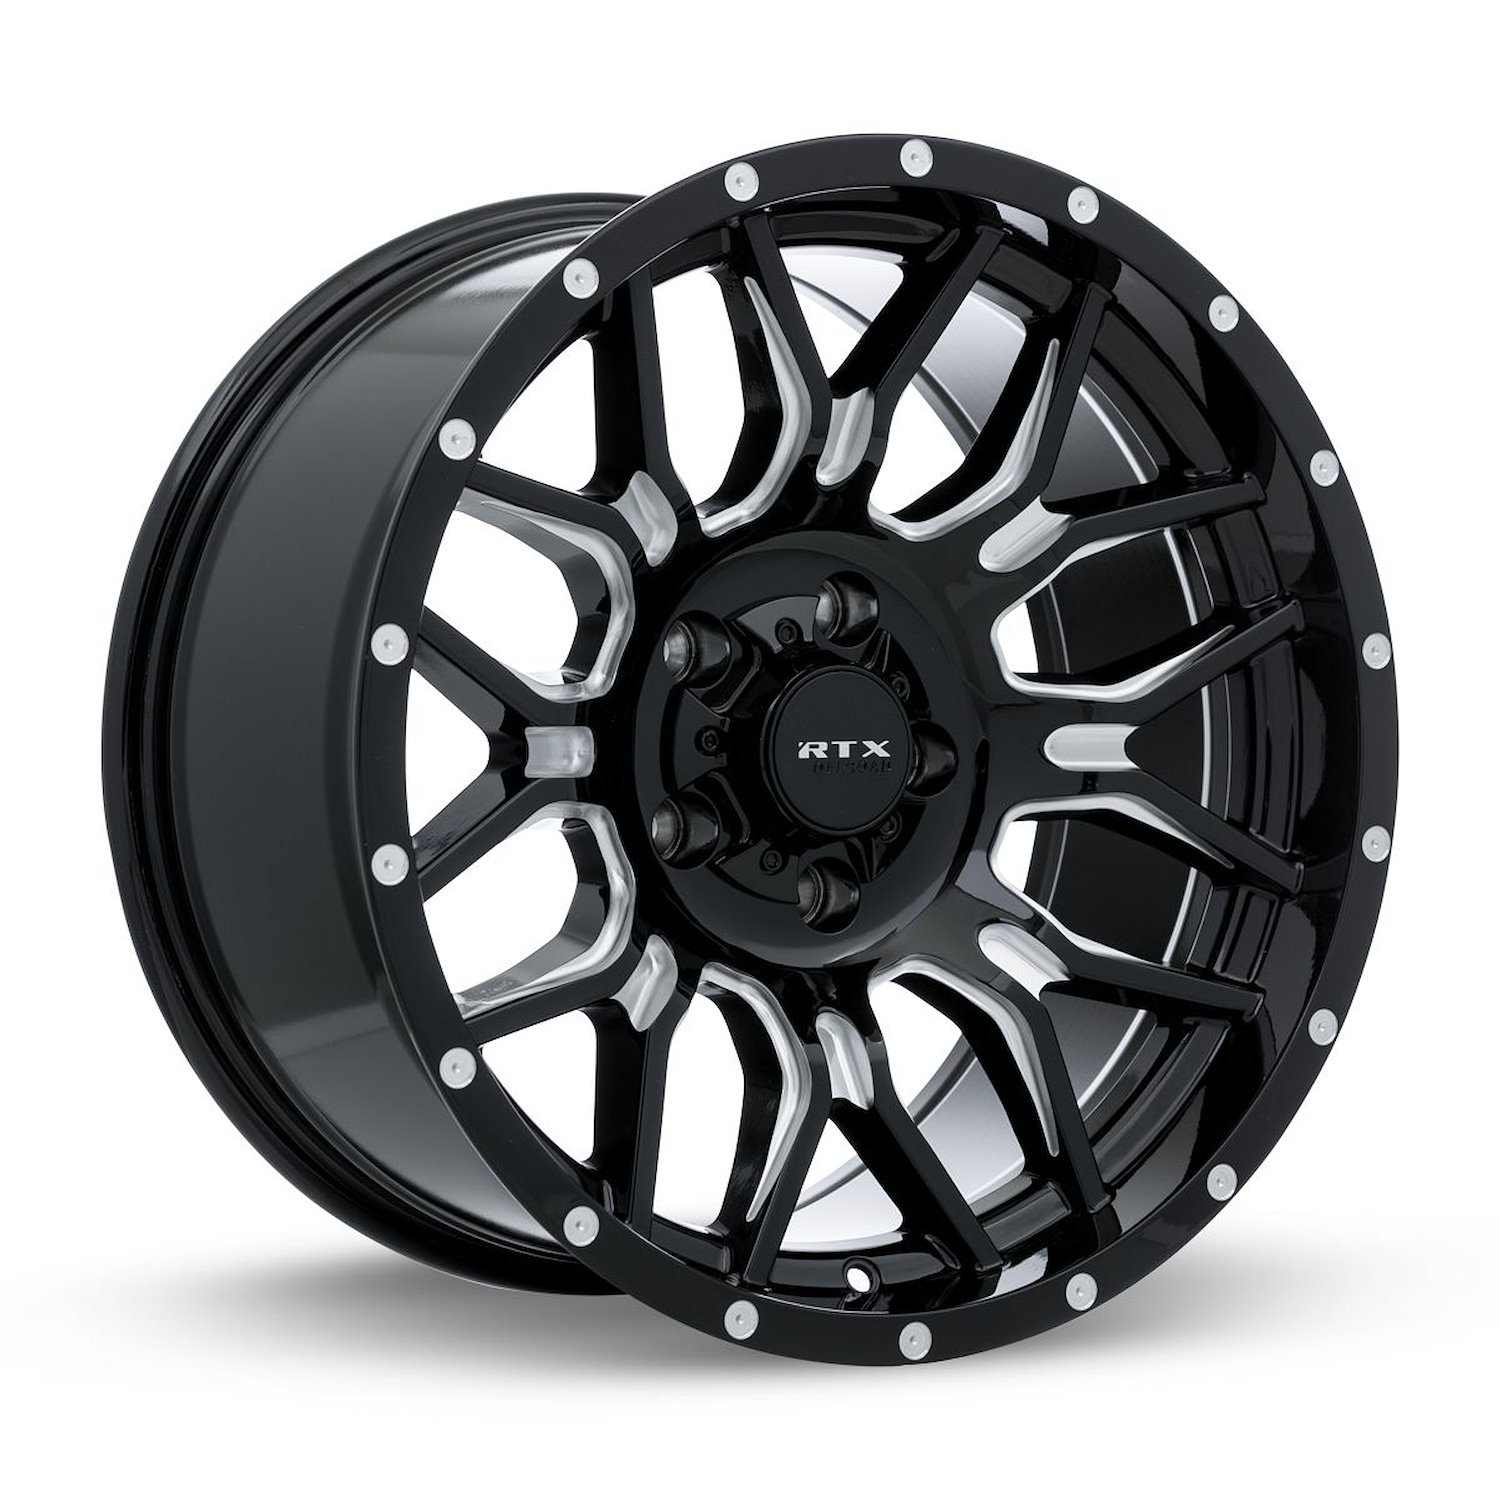 163729 Off-Road Series Claw Wheel [Size: 18" x 9"] Gloss Black Milled w/ Rivets Finish